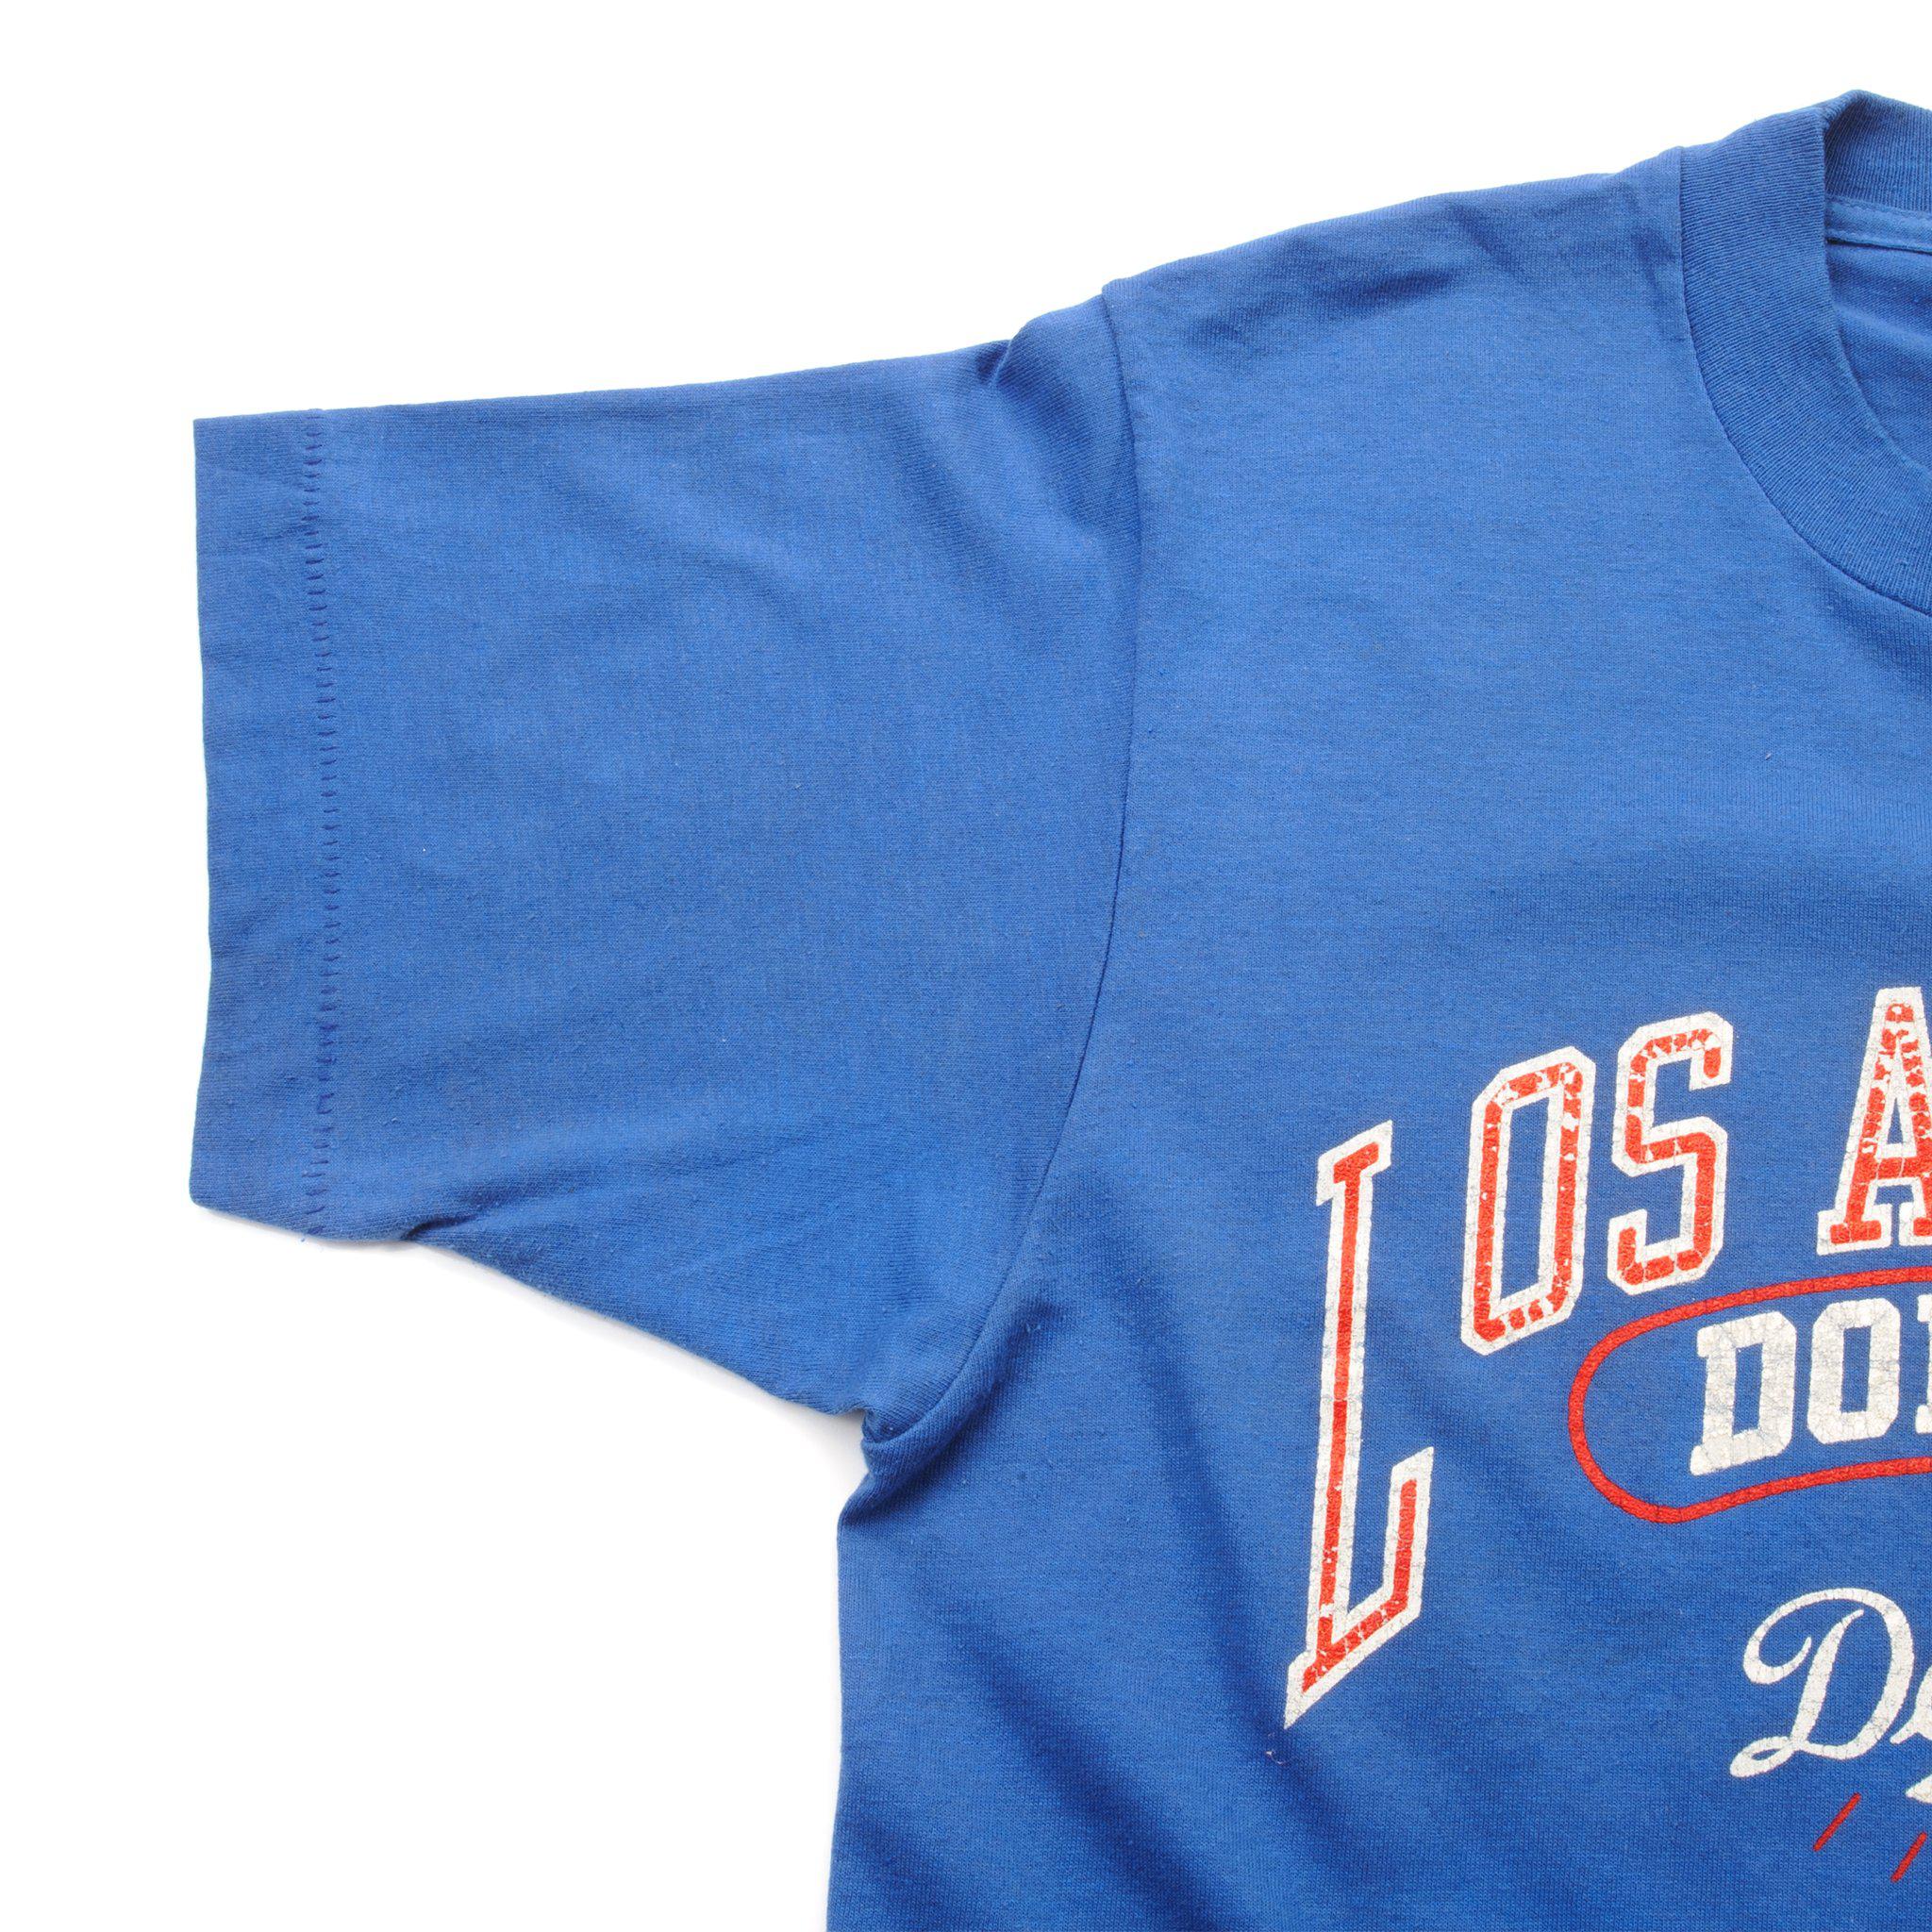 Vintage Dodgers Baseball Shirt Jersey Youth Tee Top USA